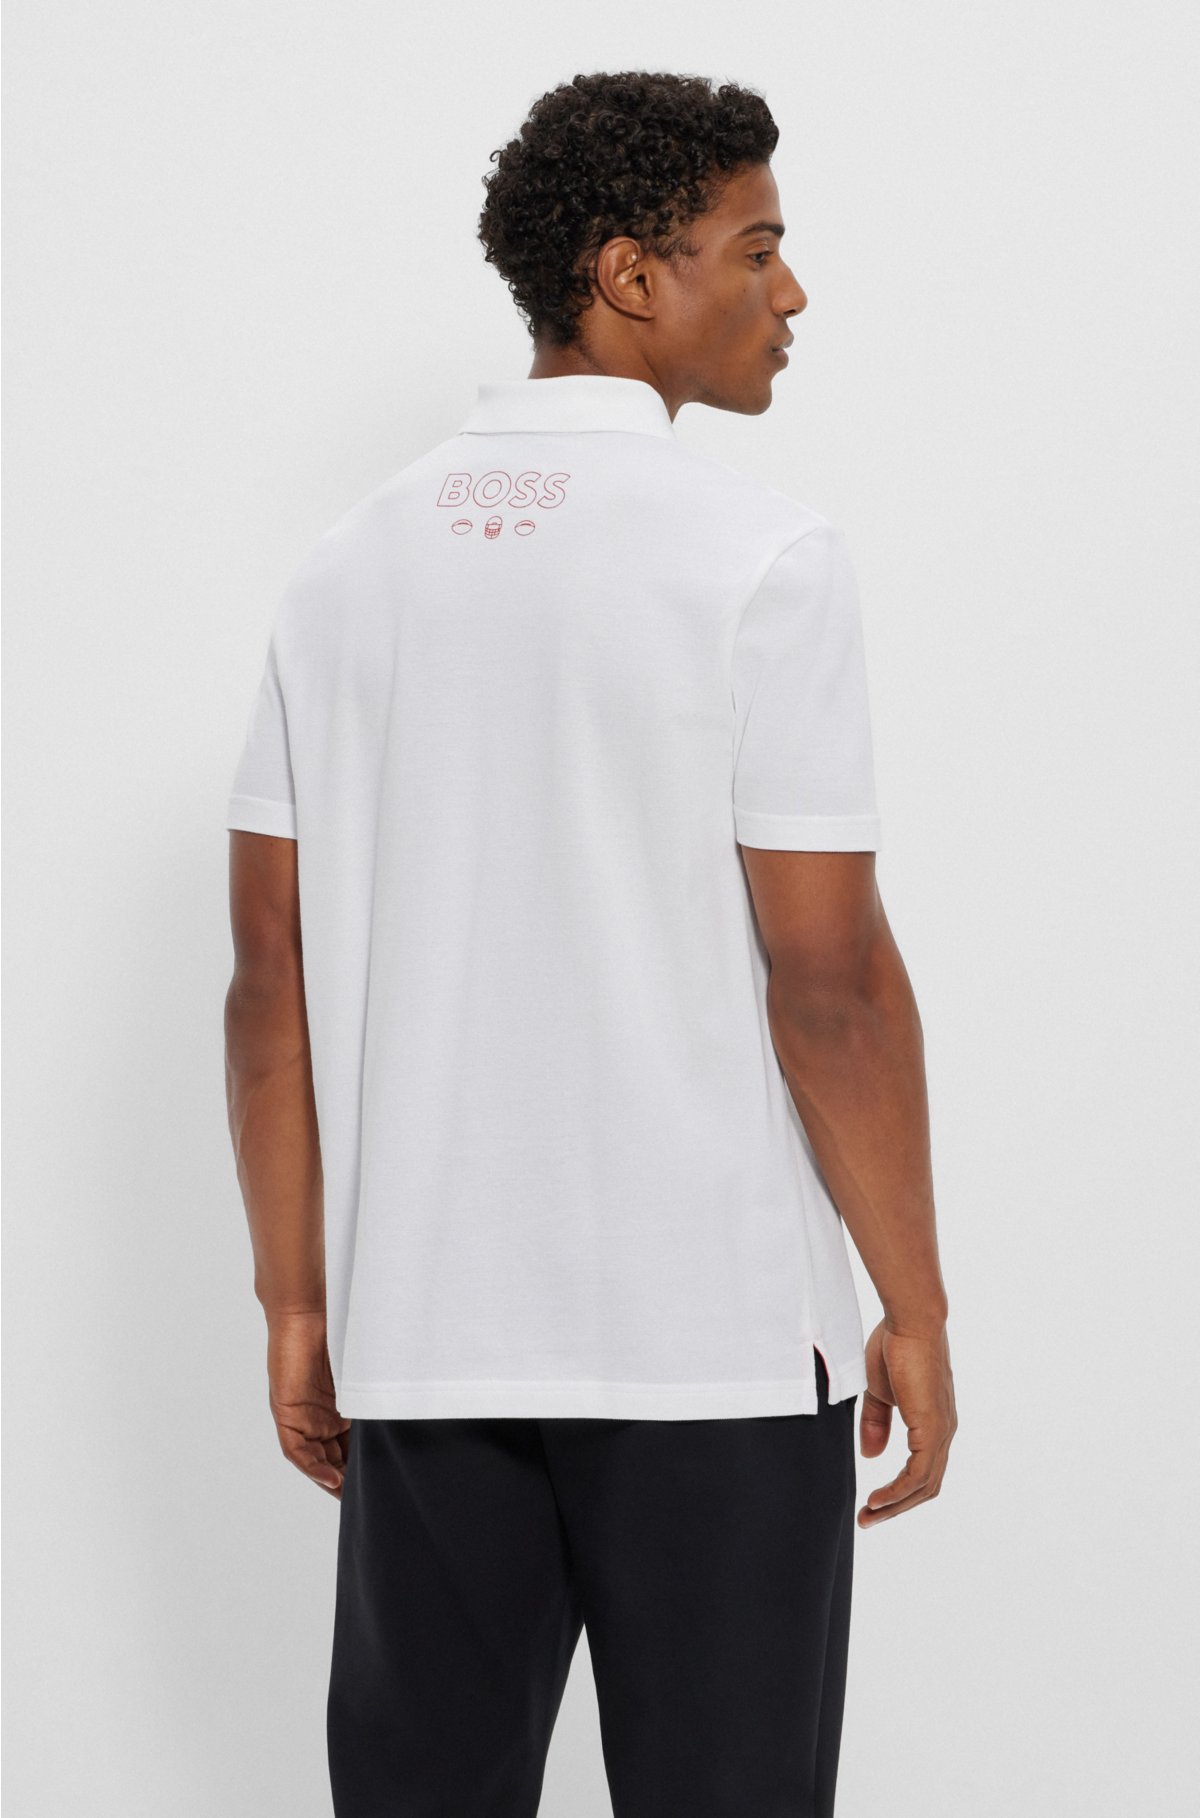 BOSS x NFL cotton-piqué polo shirt with collaborative branding, Bucs